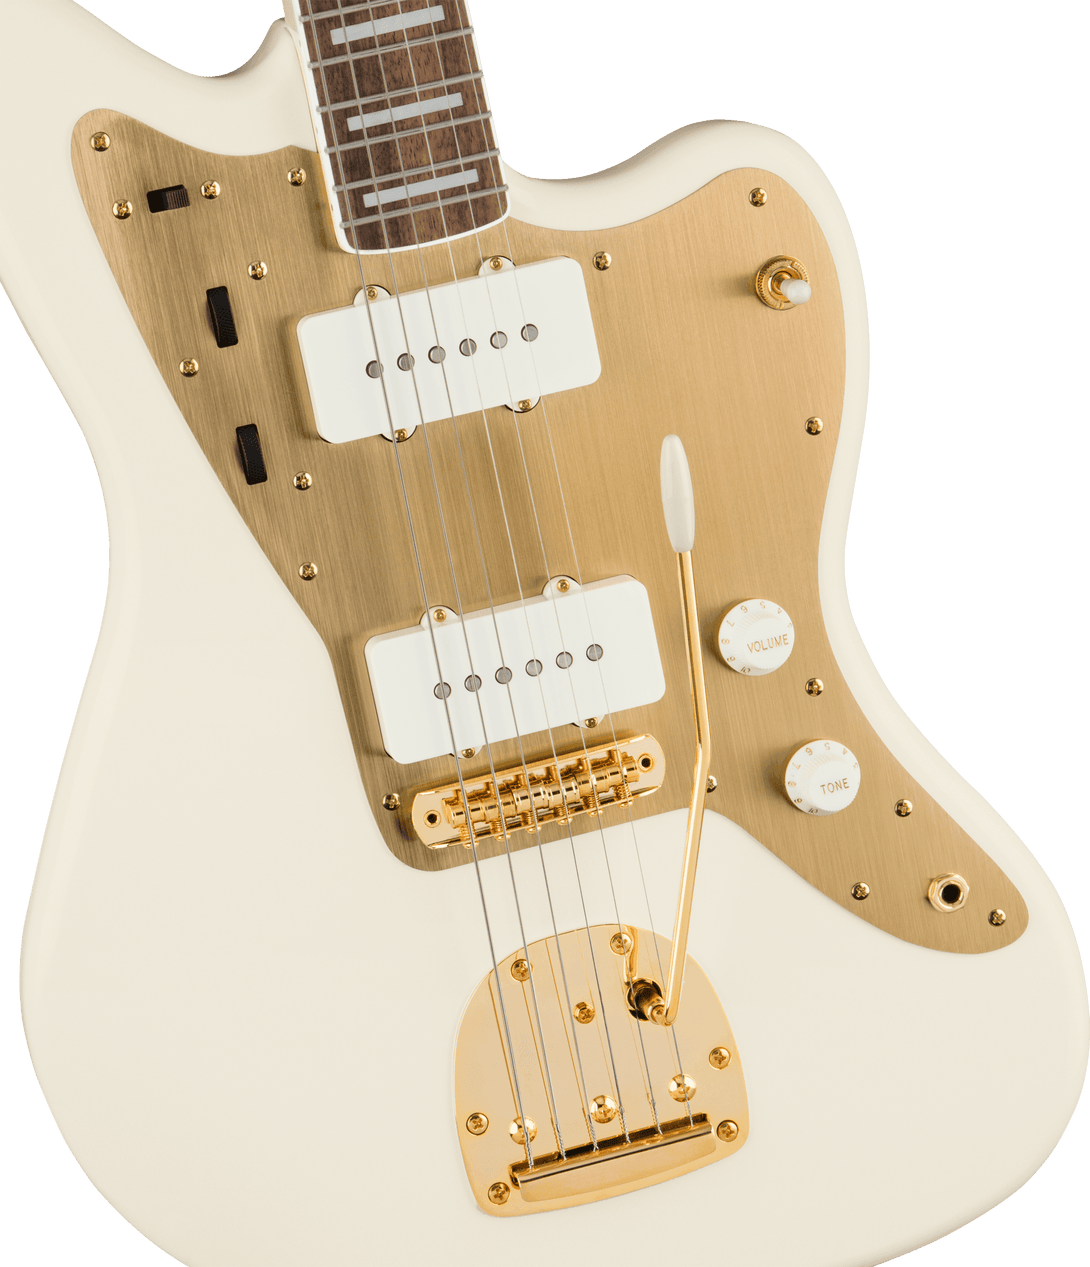 Guitarra Electrica Fender Squier 40th Anniversary Jazzmaster®, Gold Edition, diapasón de laurel, golpeador anodizado dorado, blanco olímpico 0379420505 - The Music Site